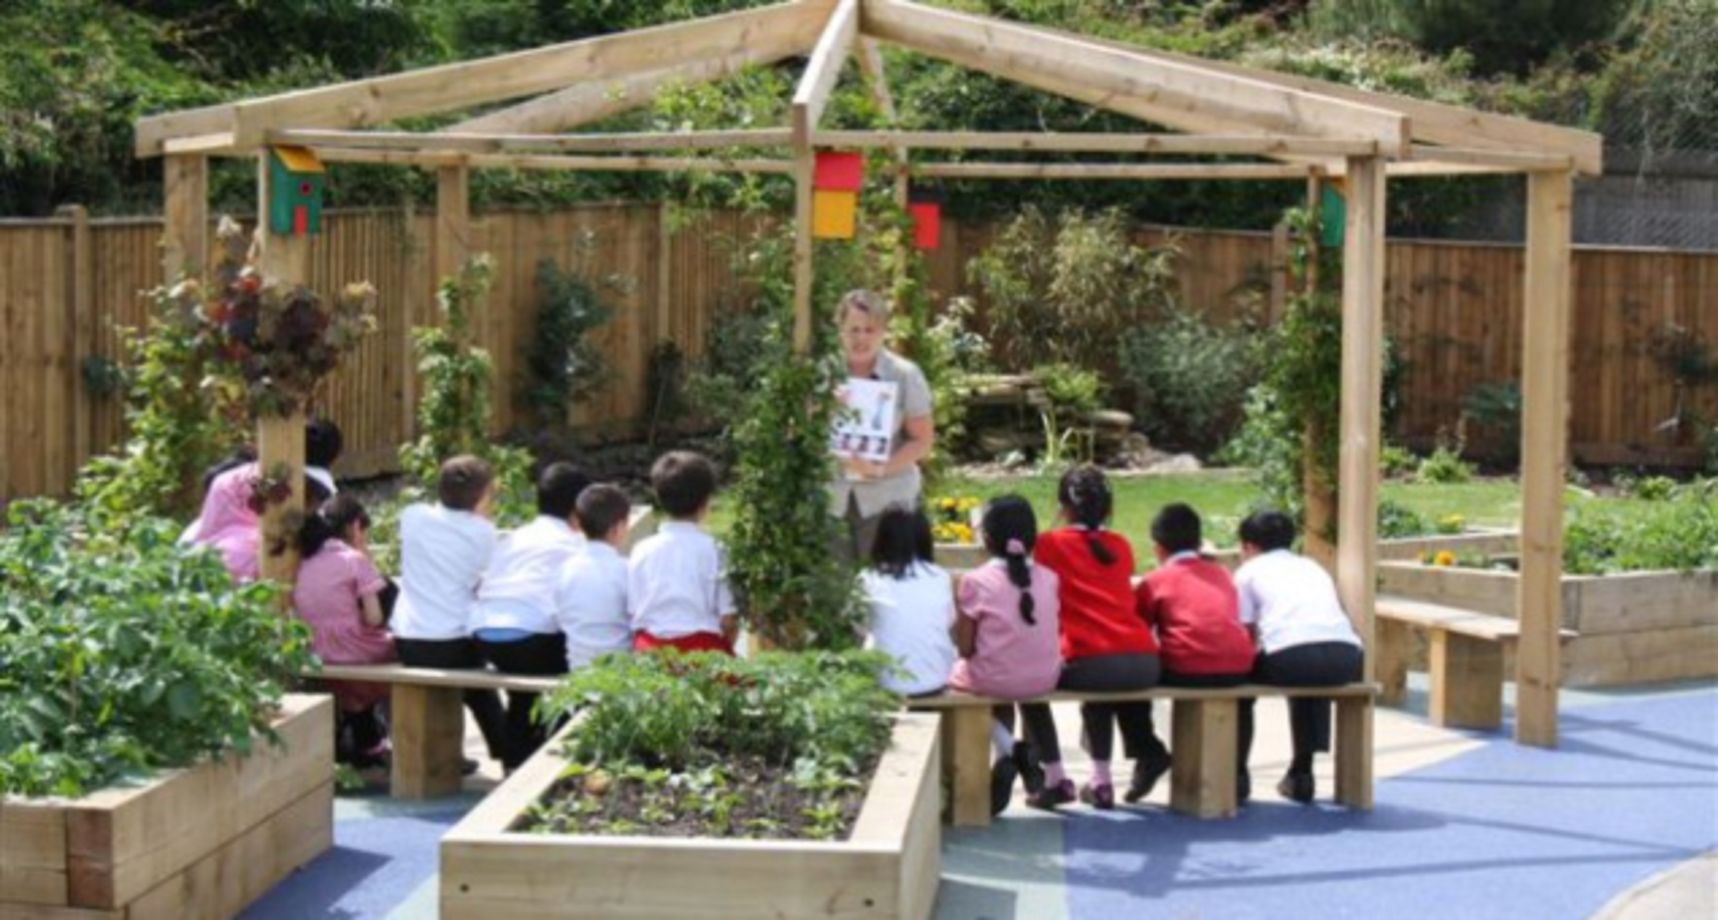 Best ideas about School Garden Ideas
. Save or Pin 35 Cute and Simple School Garden Design Ideas Round Decor Now.